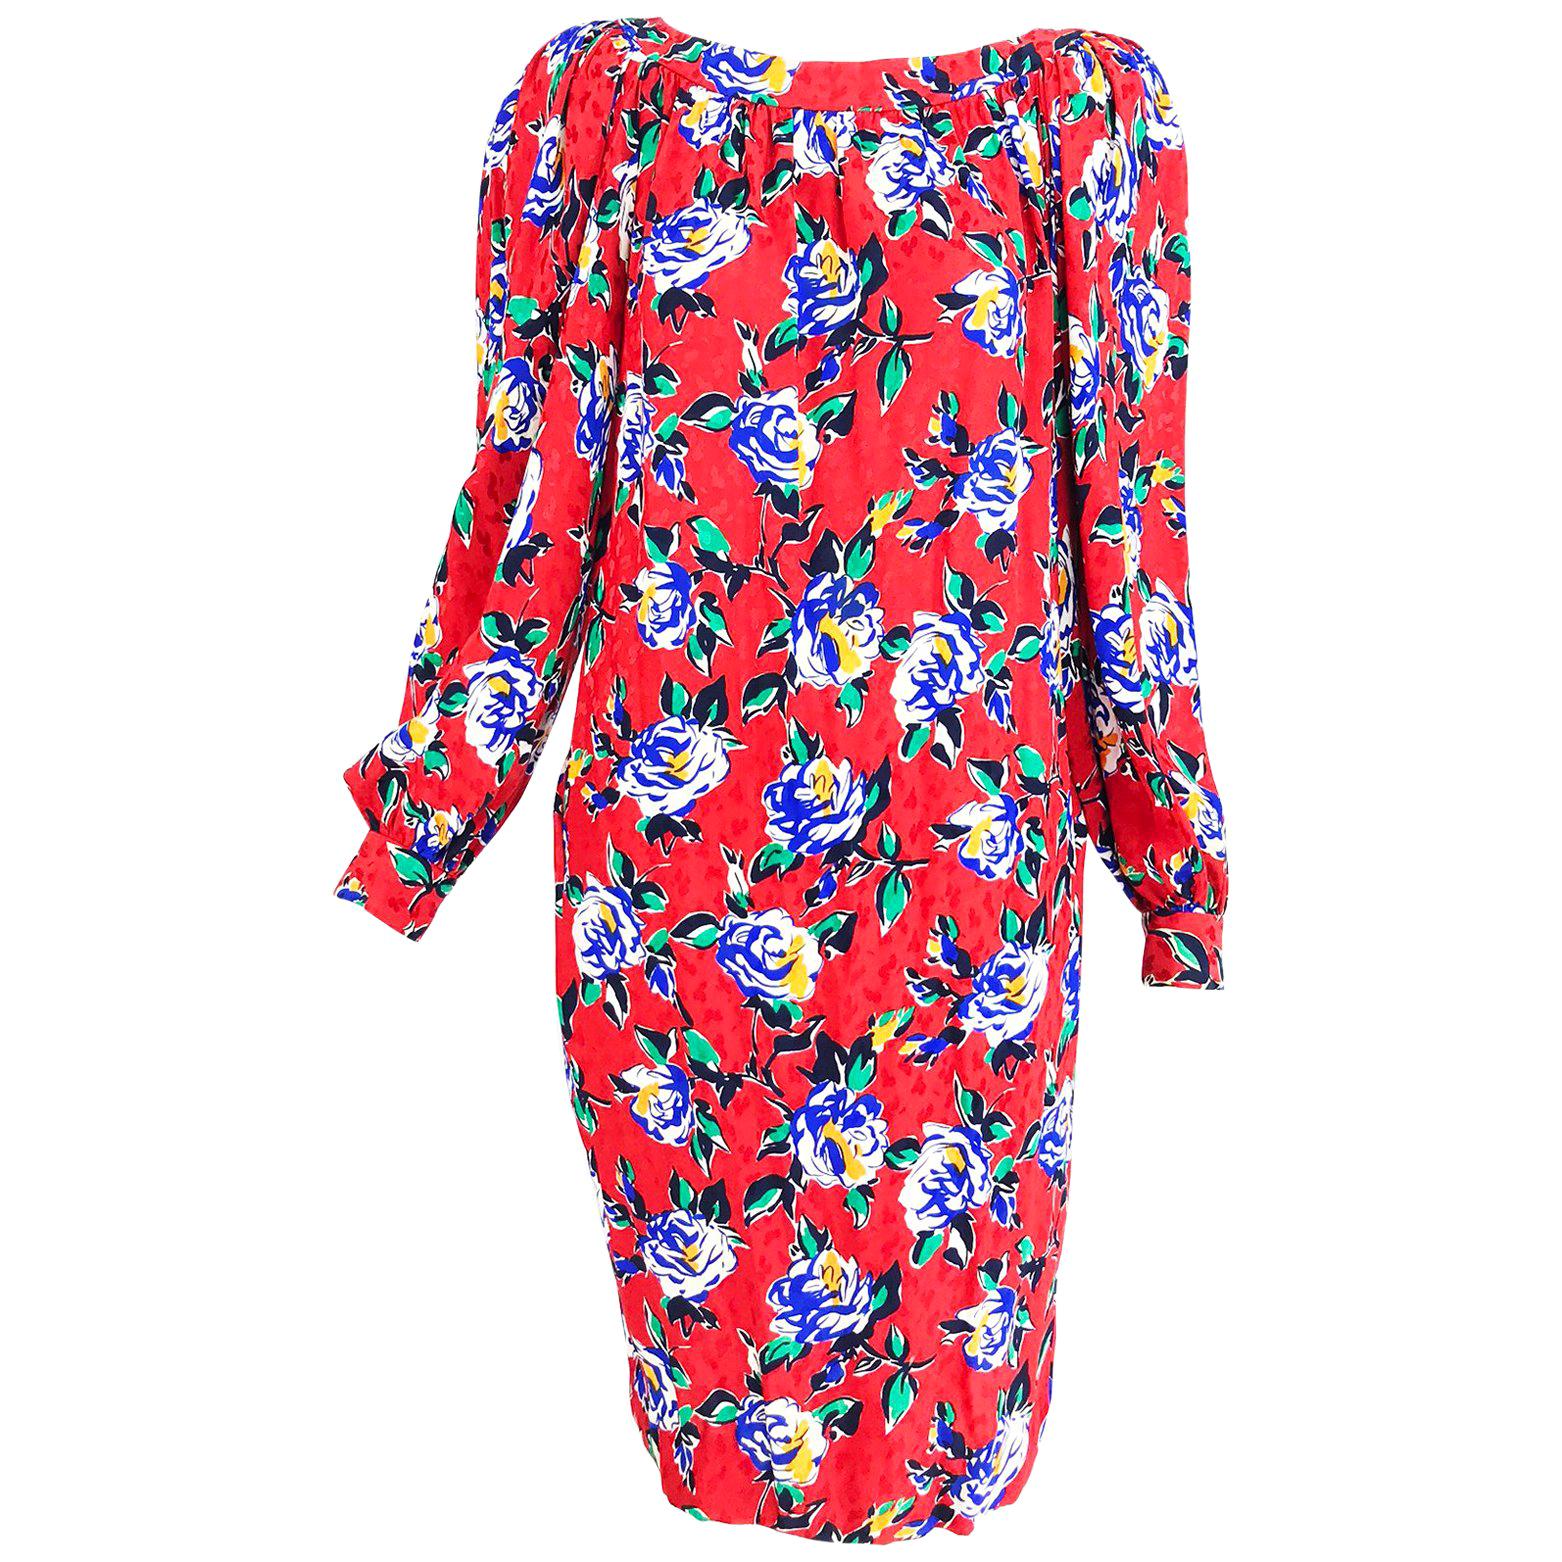 Yves Saint Laurent Red Floral Silk Jacquard Scoop Neck Dress 1990s